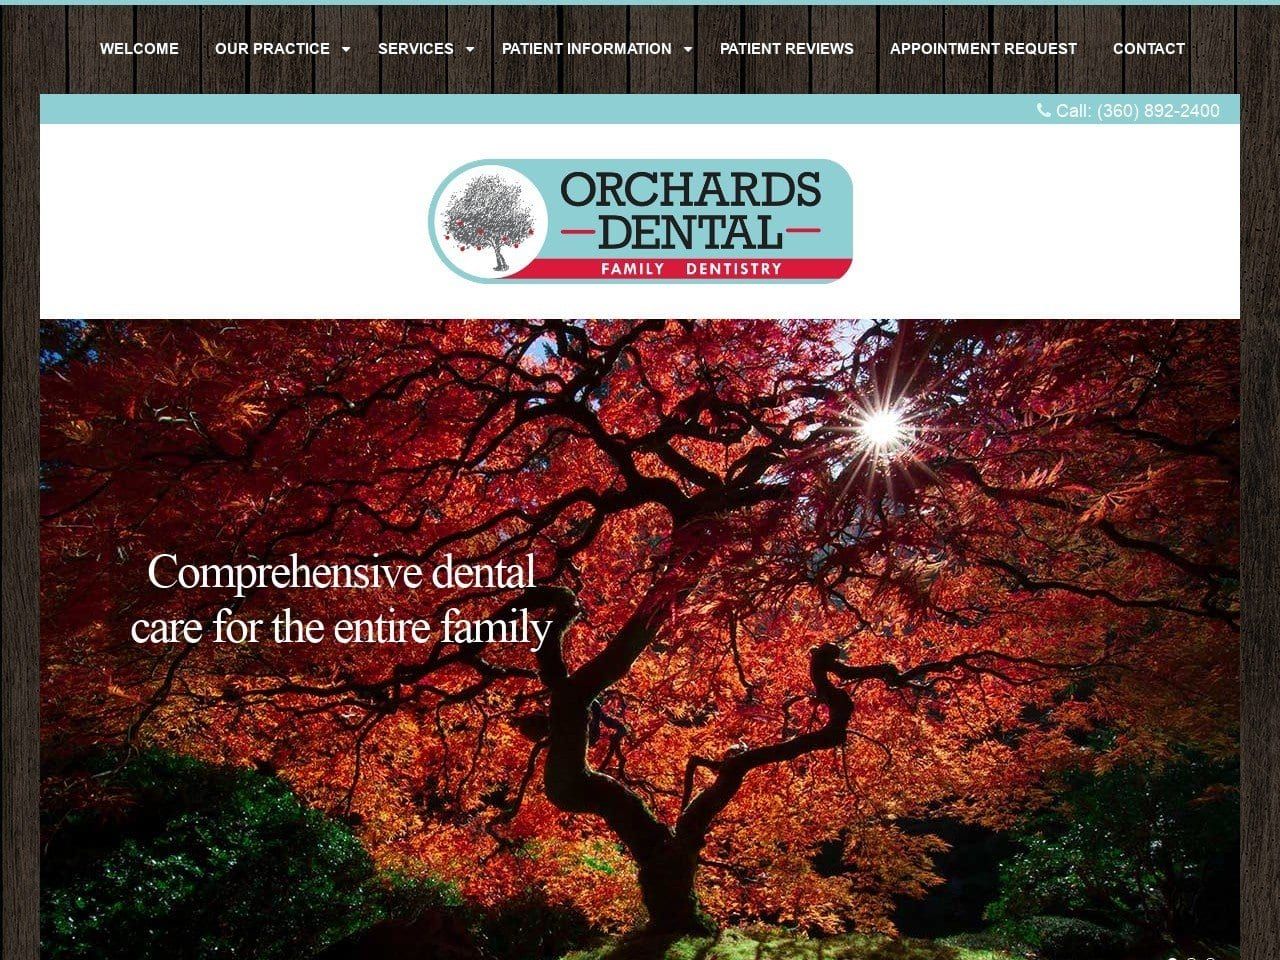 Joshua Williams DMD Pc Website Screenshot from orchardsdental.com